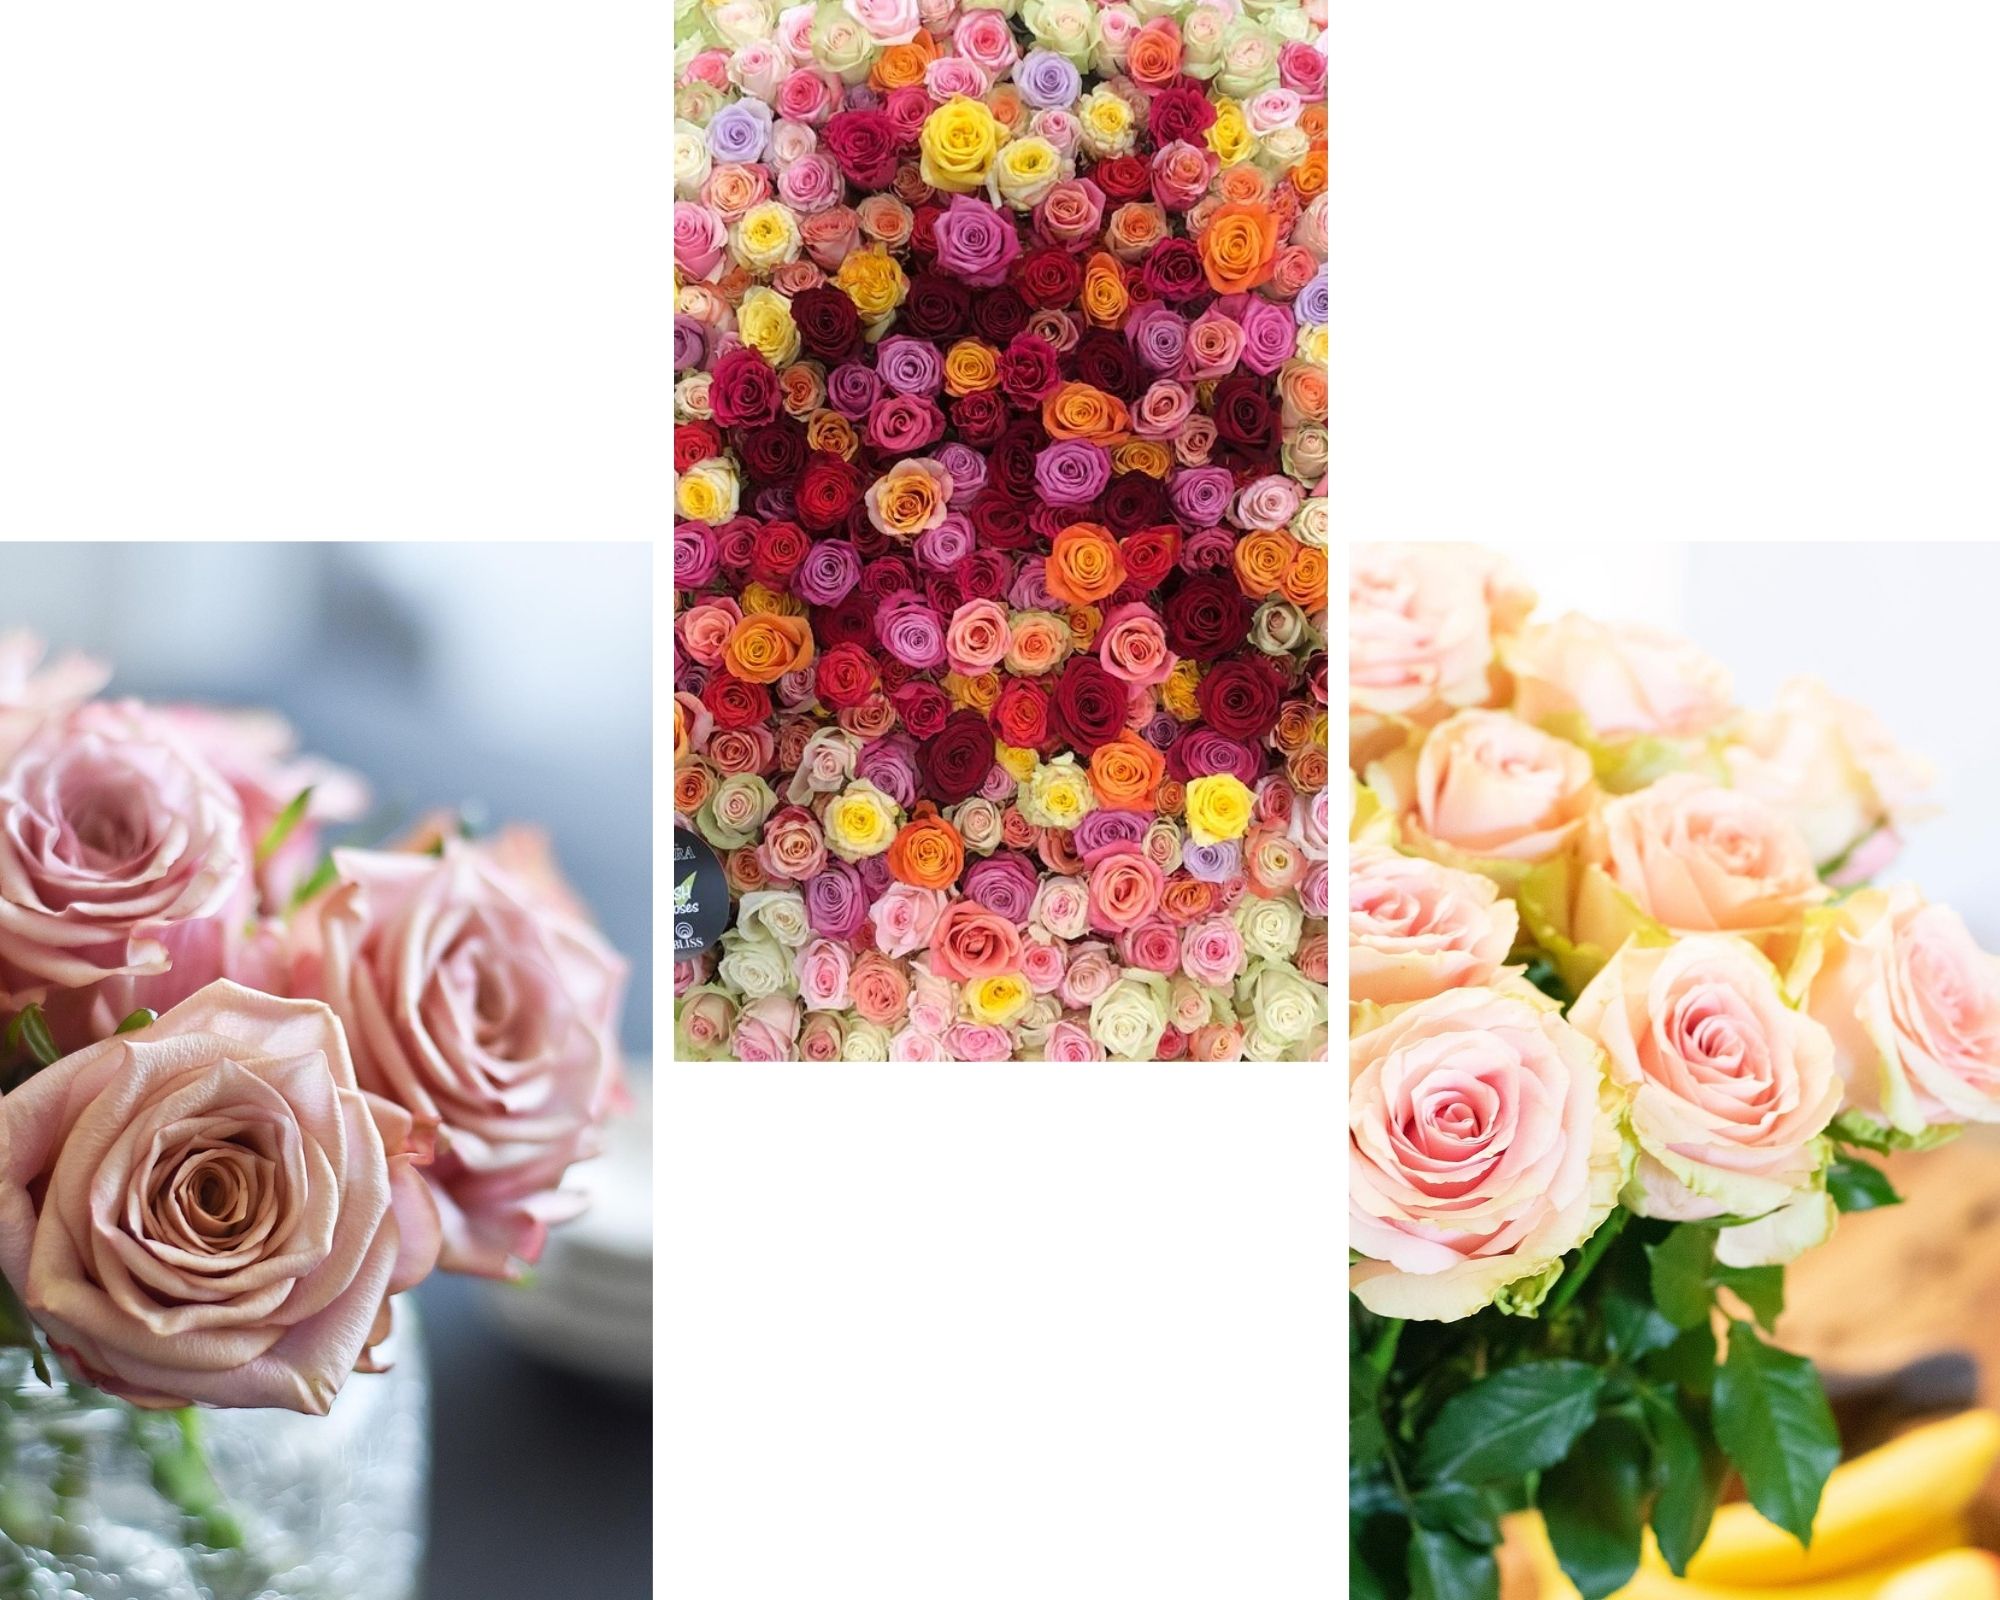 Decofresh varieties collage2 - Florist rose paradise - TOTF2020 on thursd